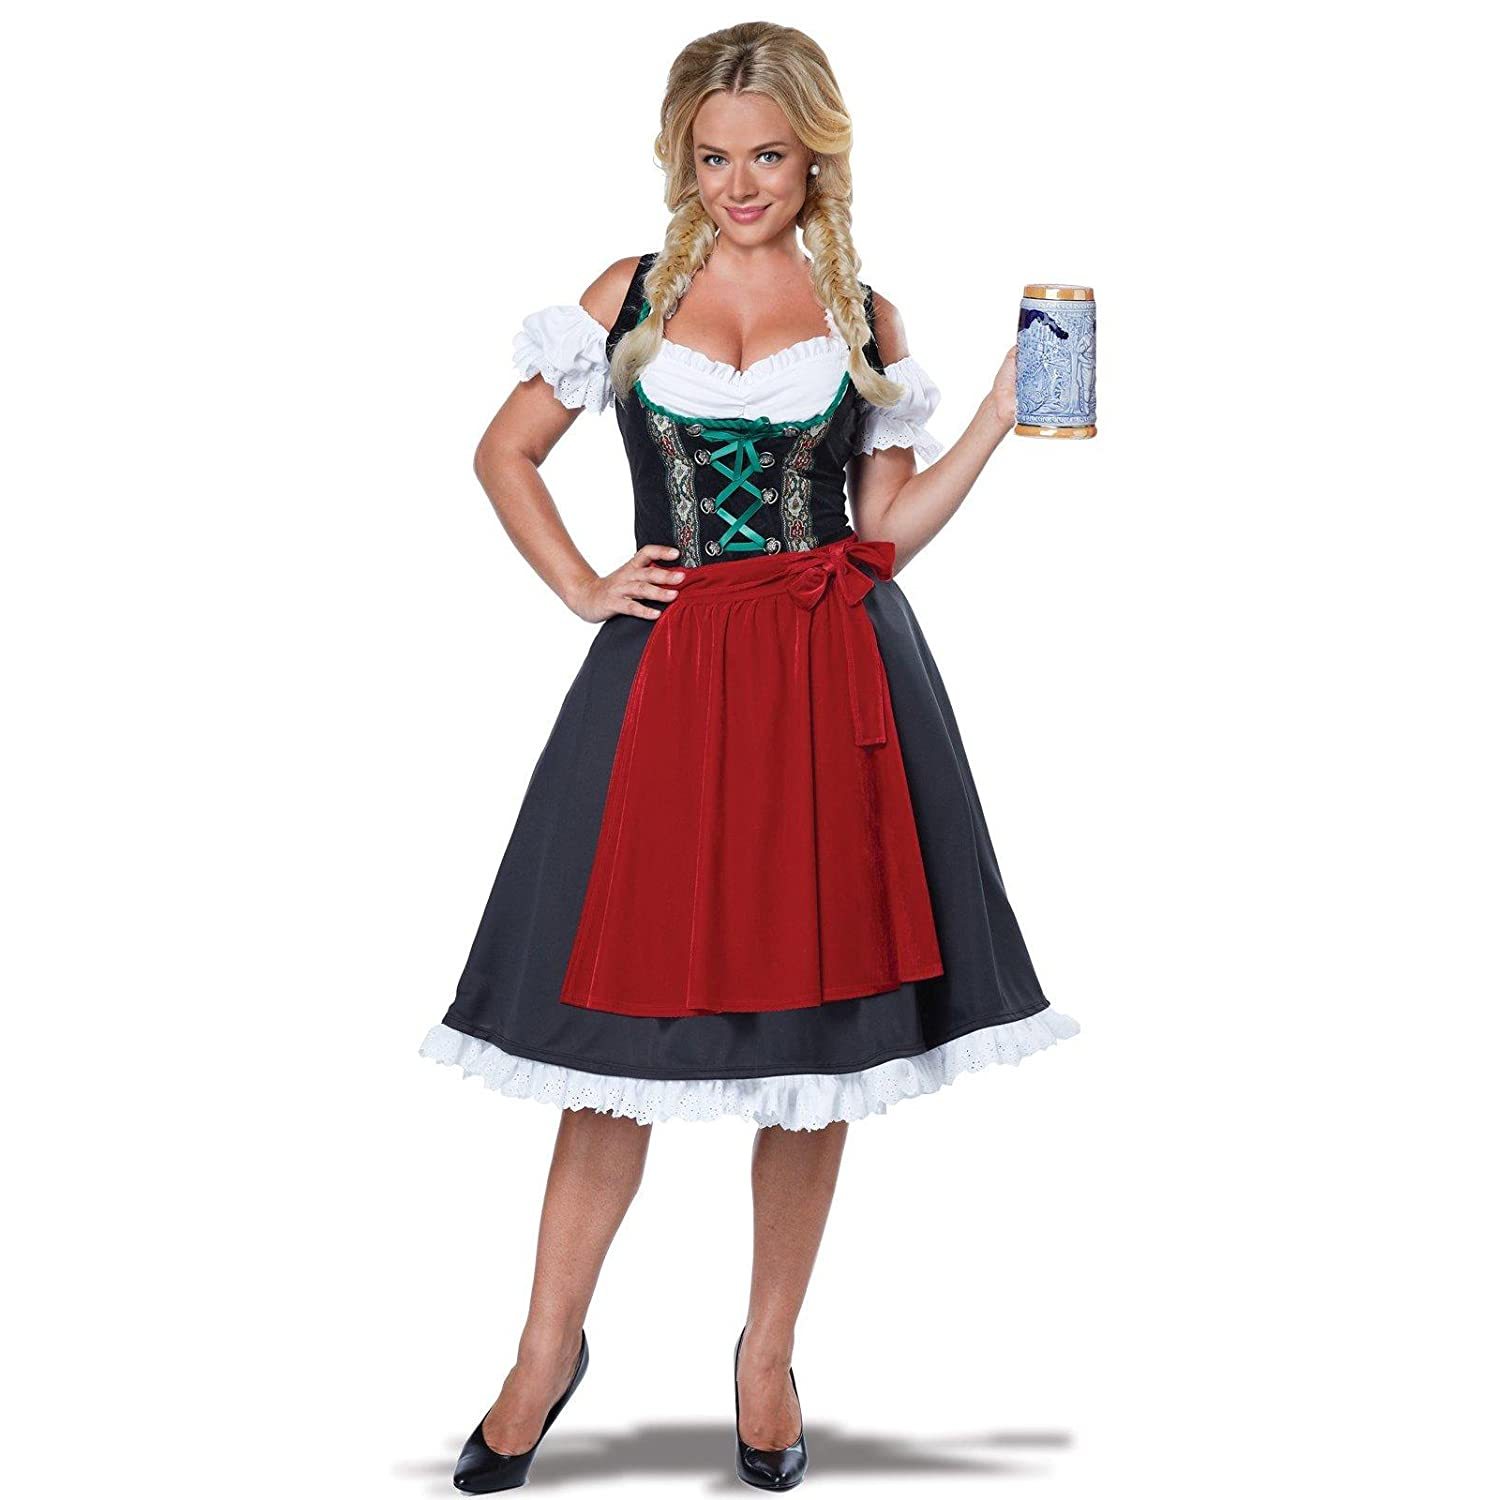 California Costumes Women'S Oktoberfest Fraulein Costume, Multi, Large